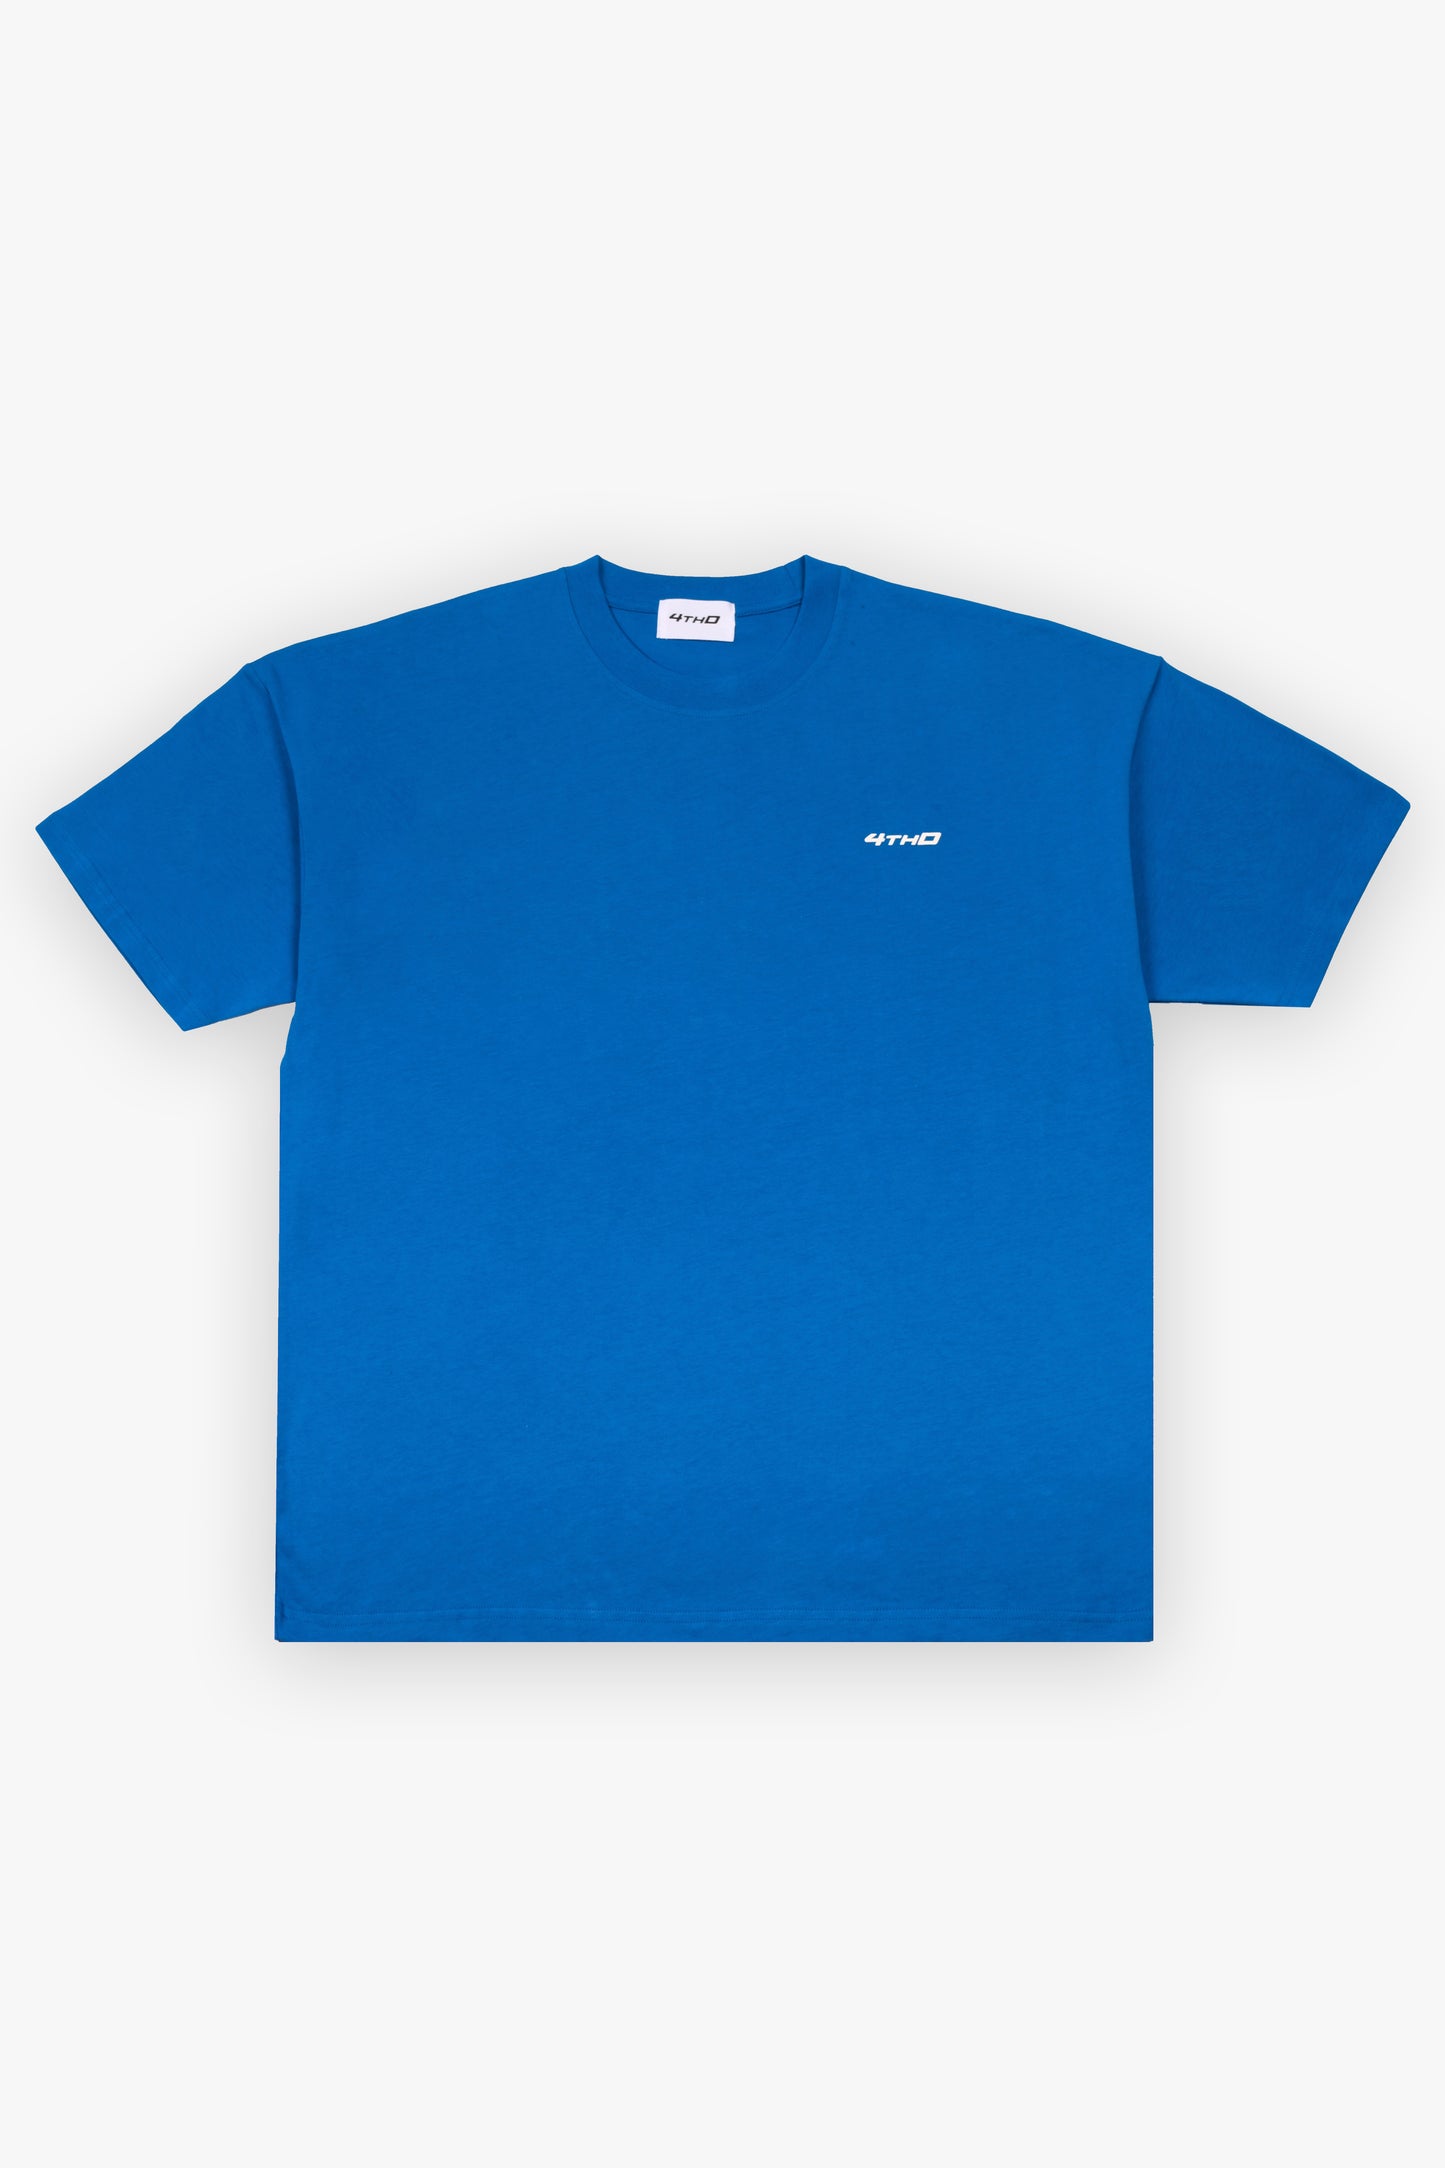 Colors Shirt - Navy Blue